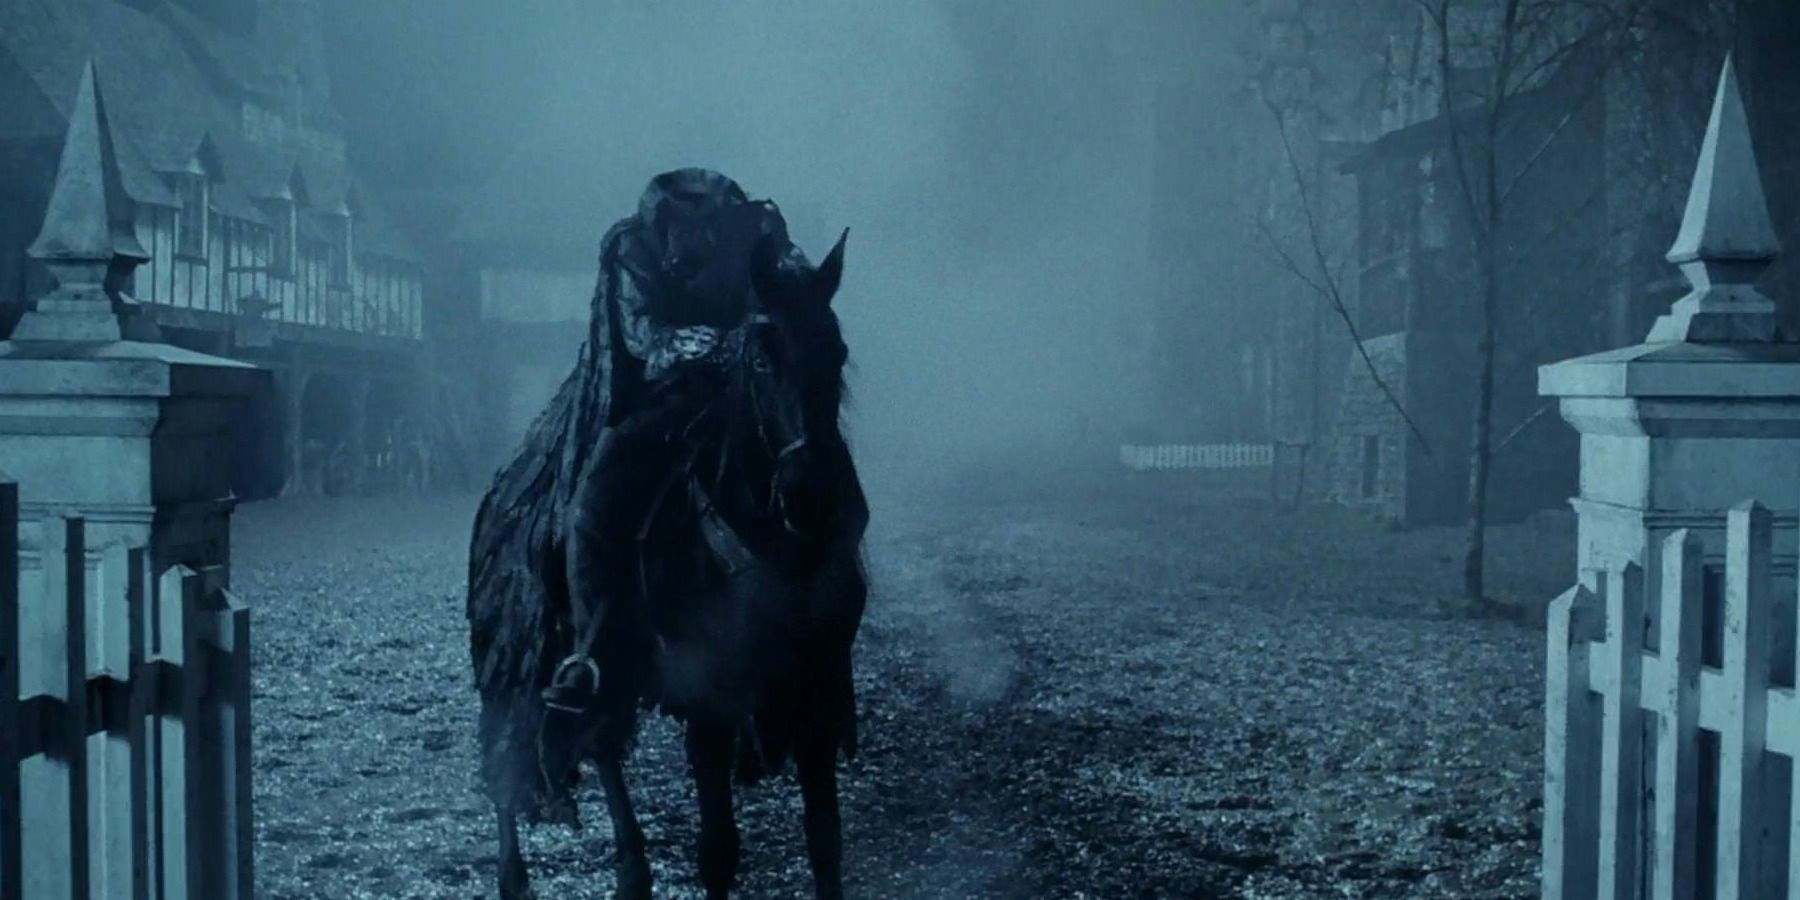 Headless Horseman rides through the town in Sleepy Hollow